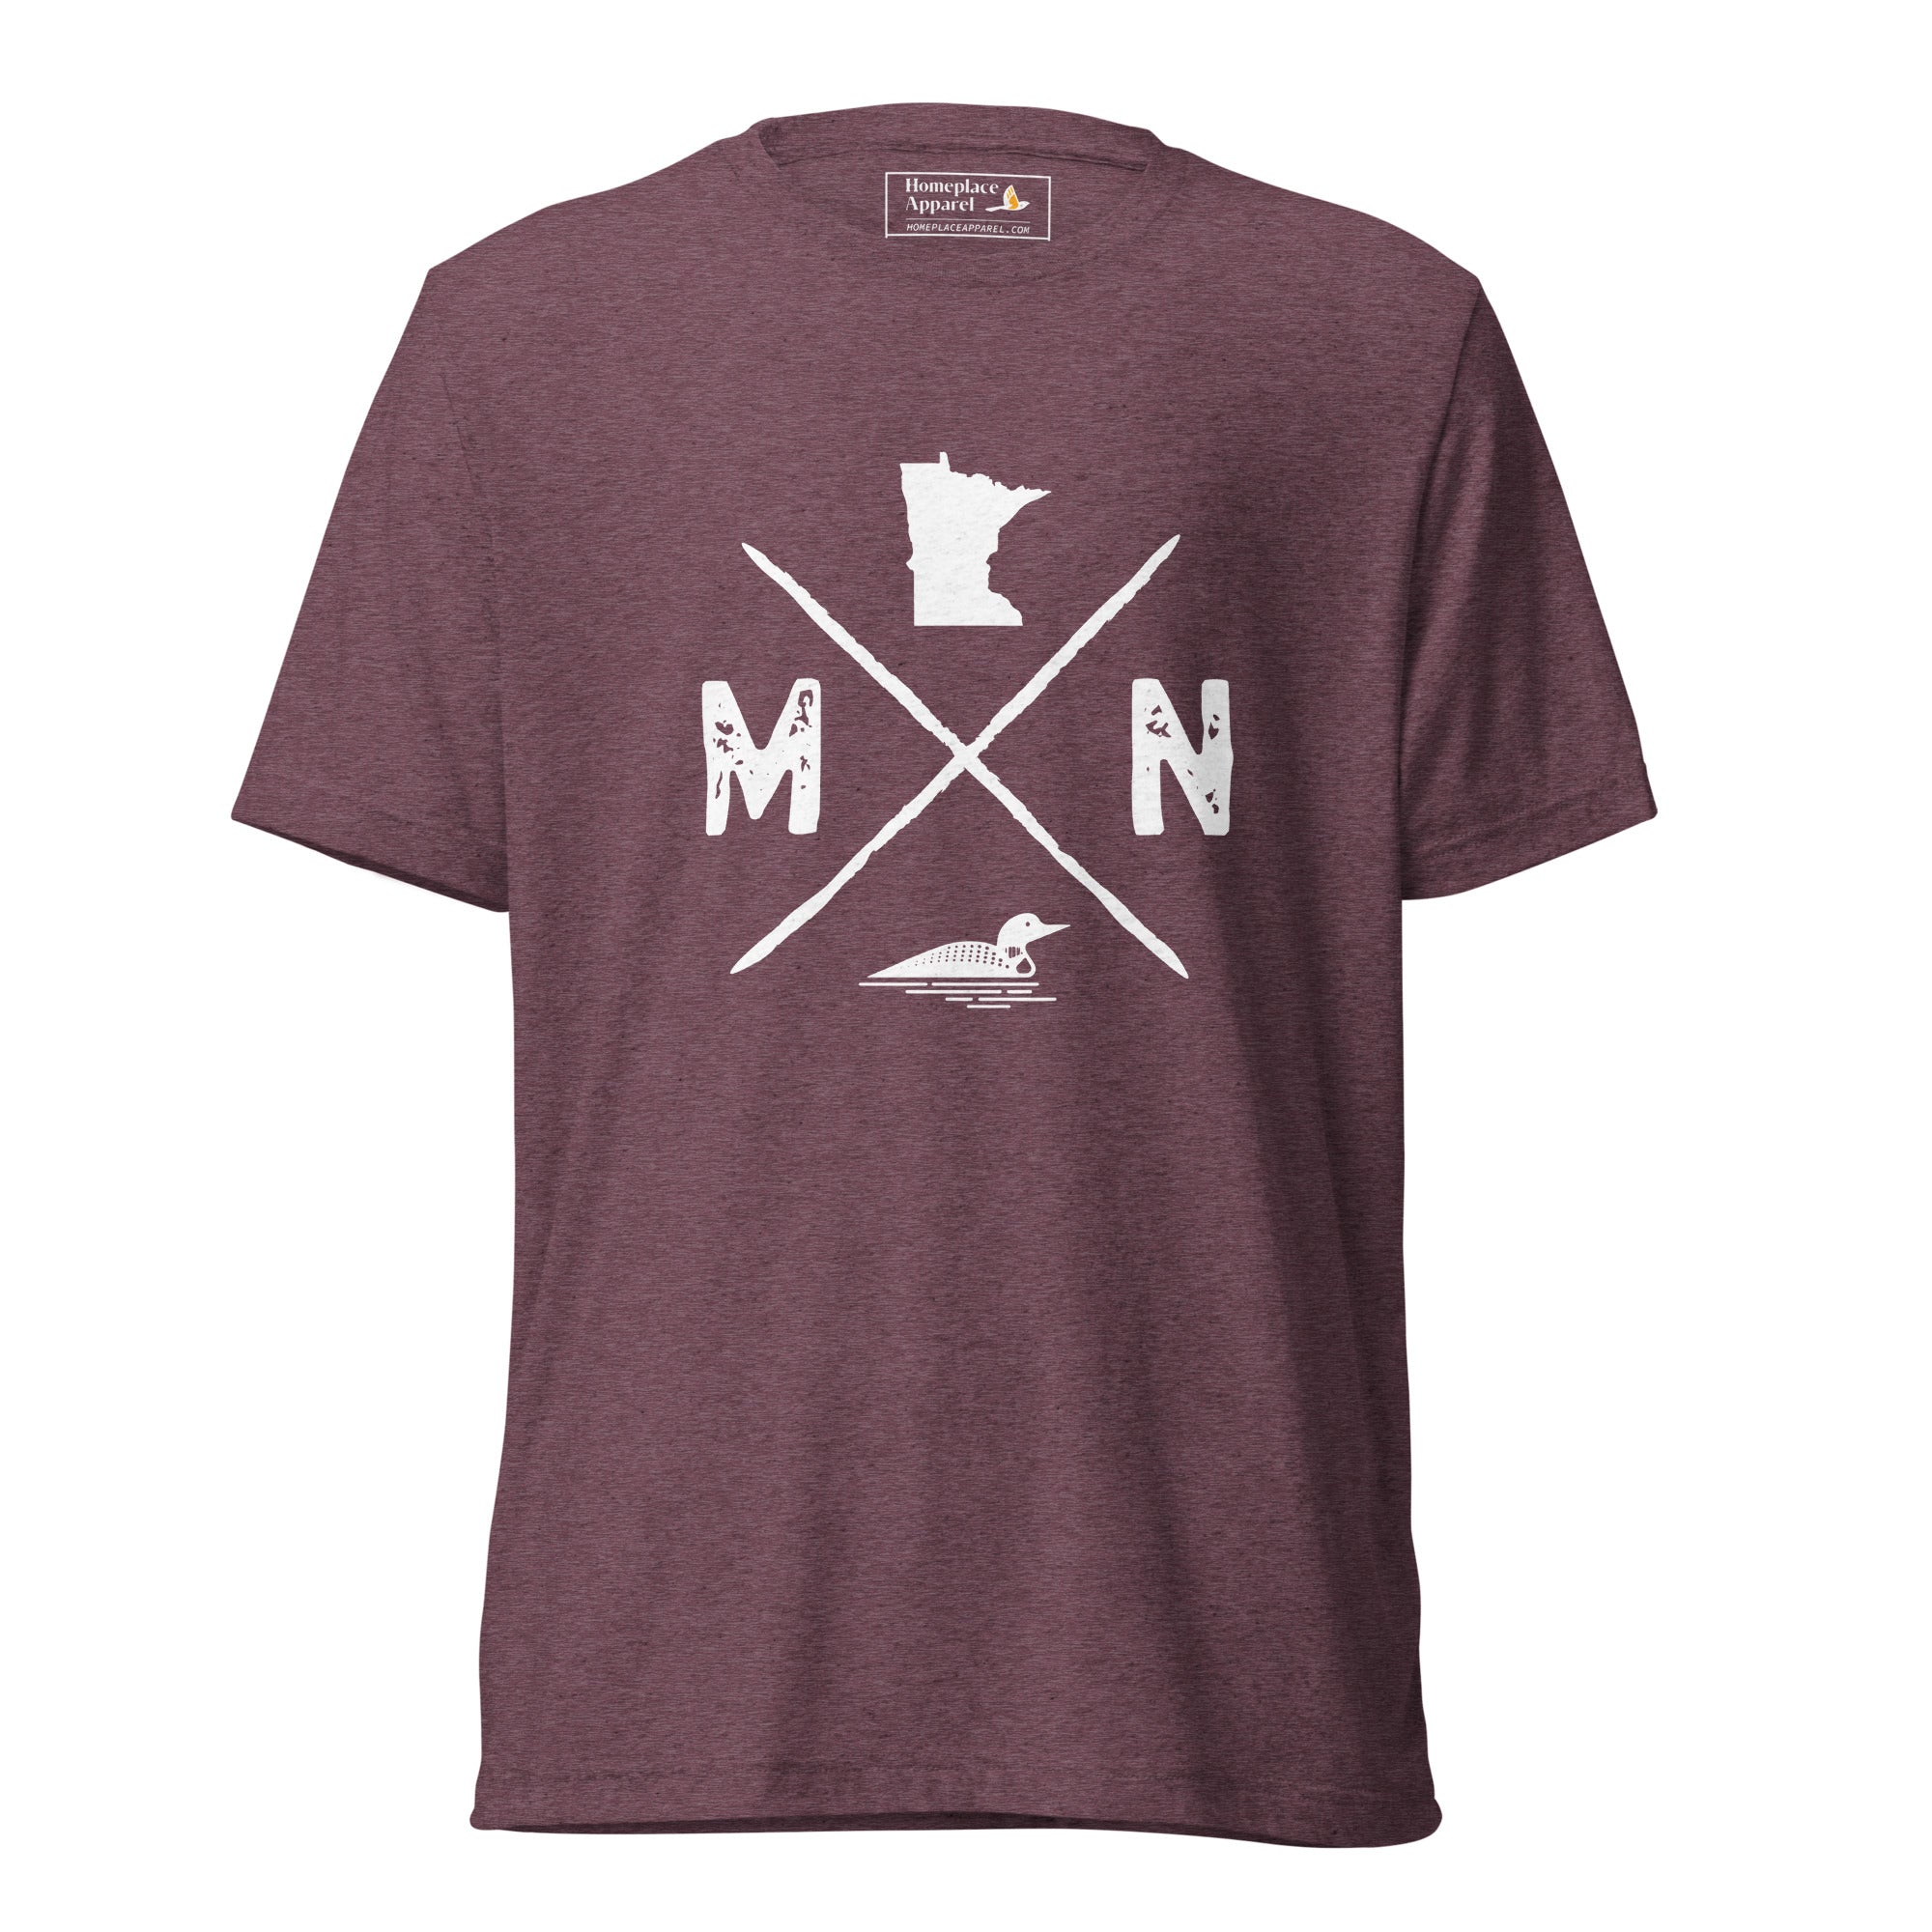 unisex-tri-blend-t-shirt-maroon-triblend-front-650f72b82c504.jpg